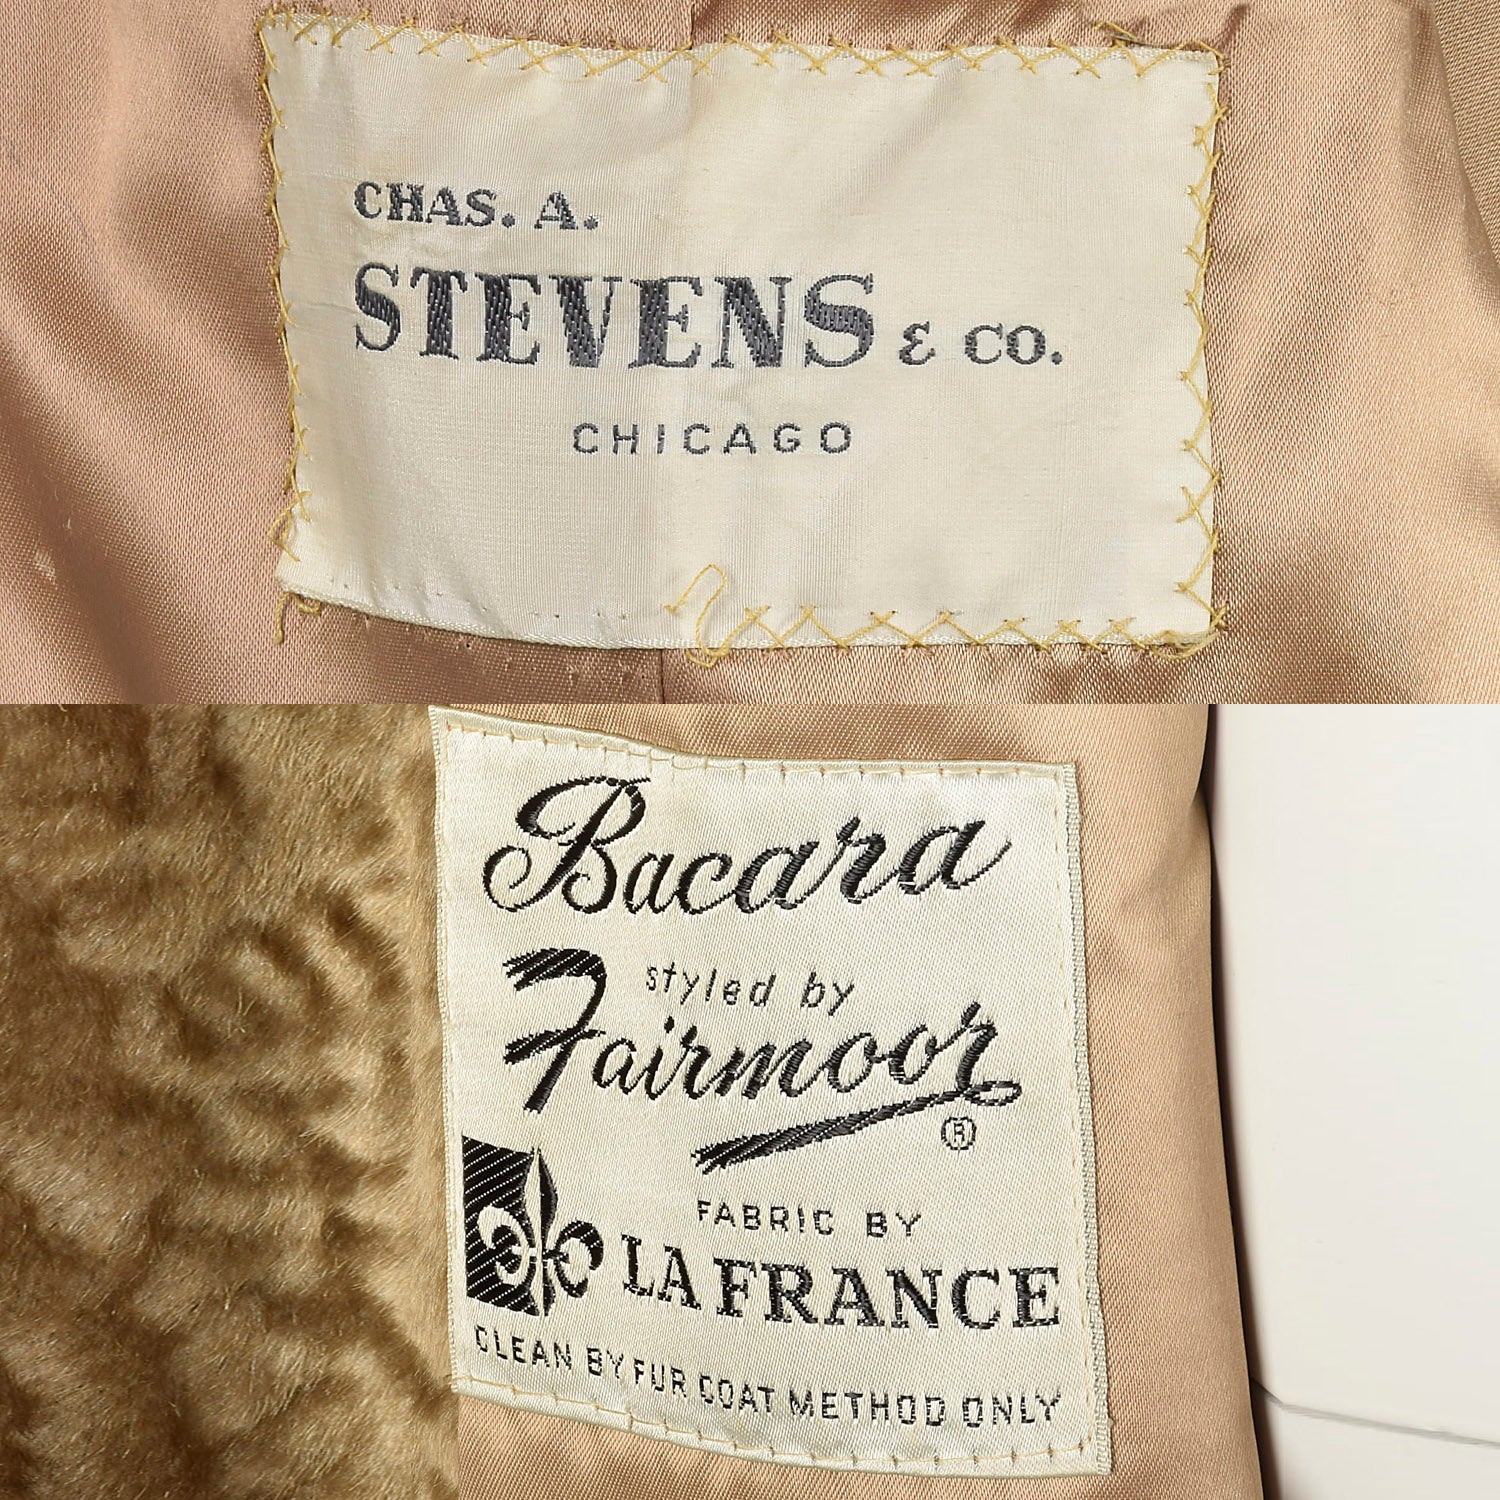 XL 1950s Faux Fur and Real Fur Coat